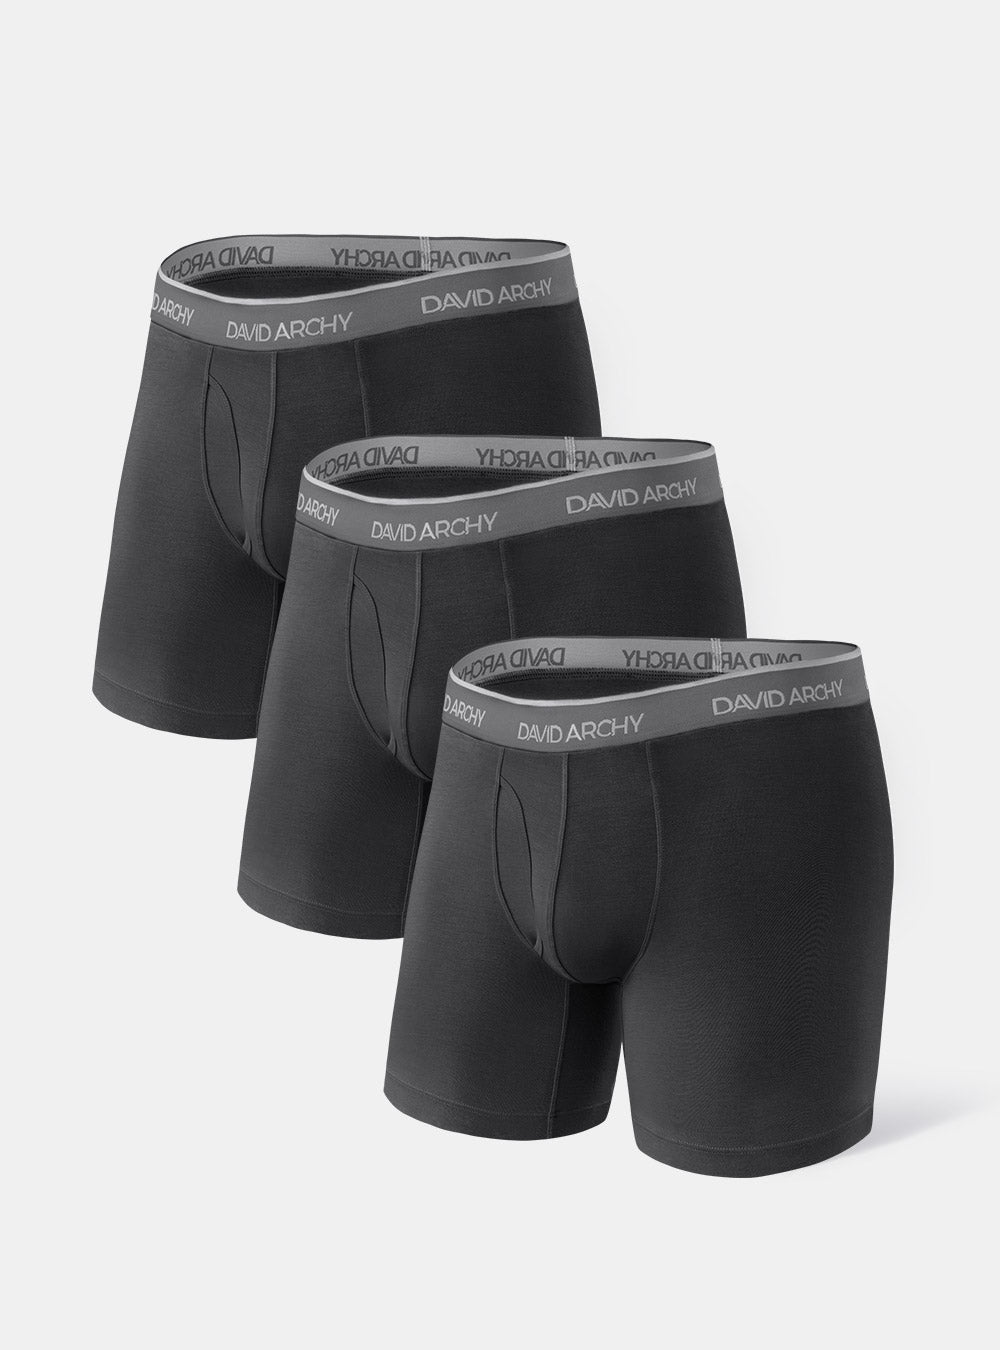 David Archy 3 Packs of Comfortable Moda Boxer Briefs Cool Silky 3D Pouch  Lightweight 3D Contour Pouc